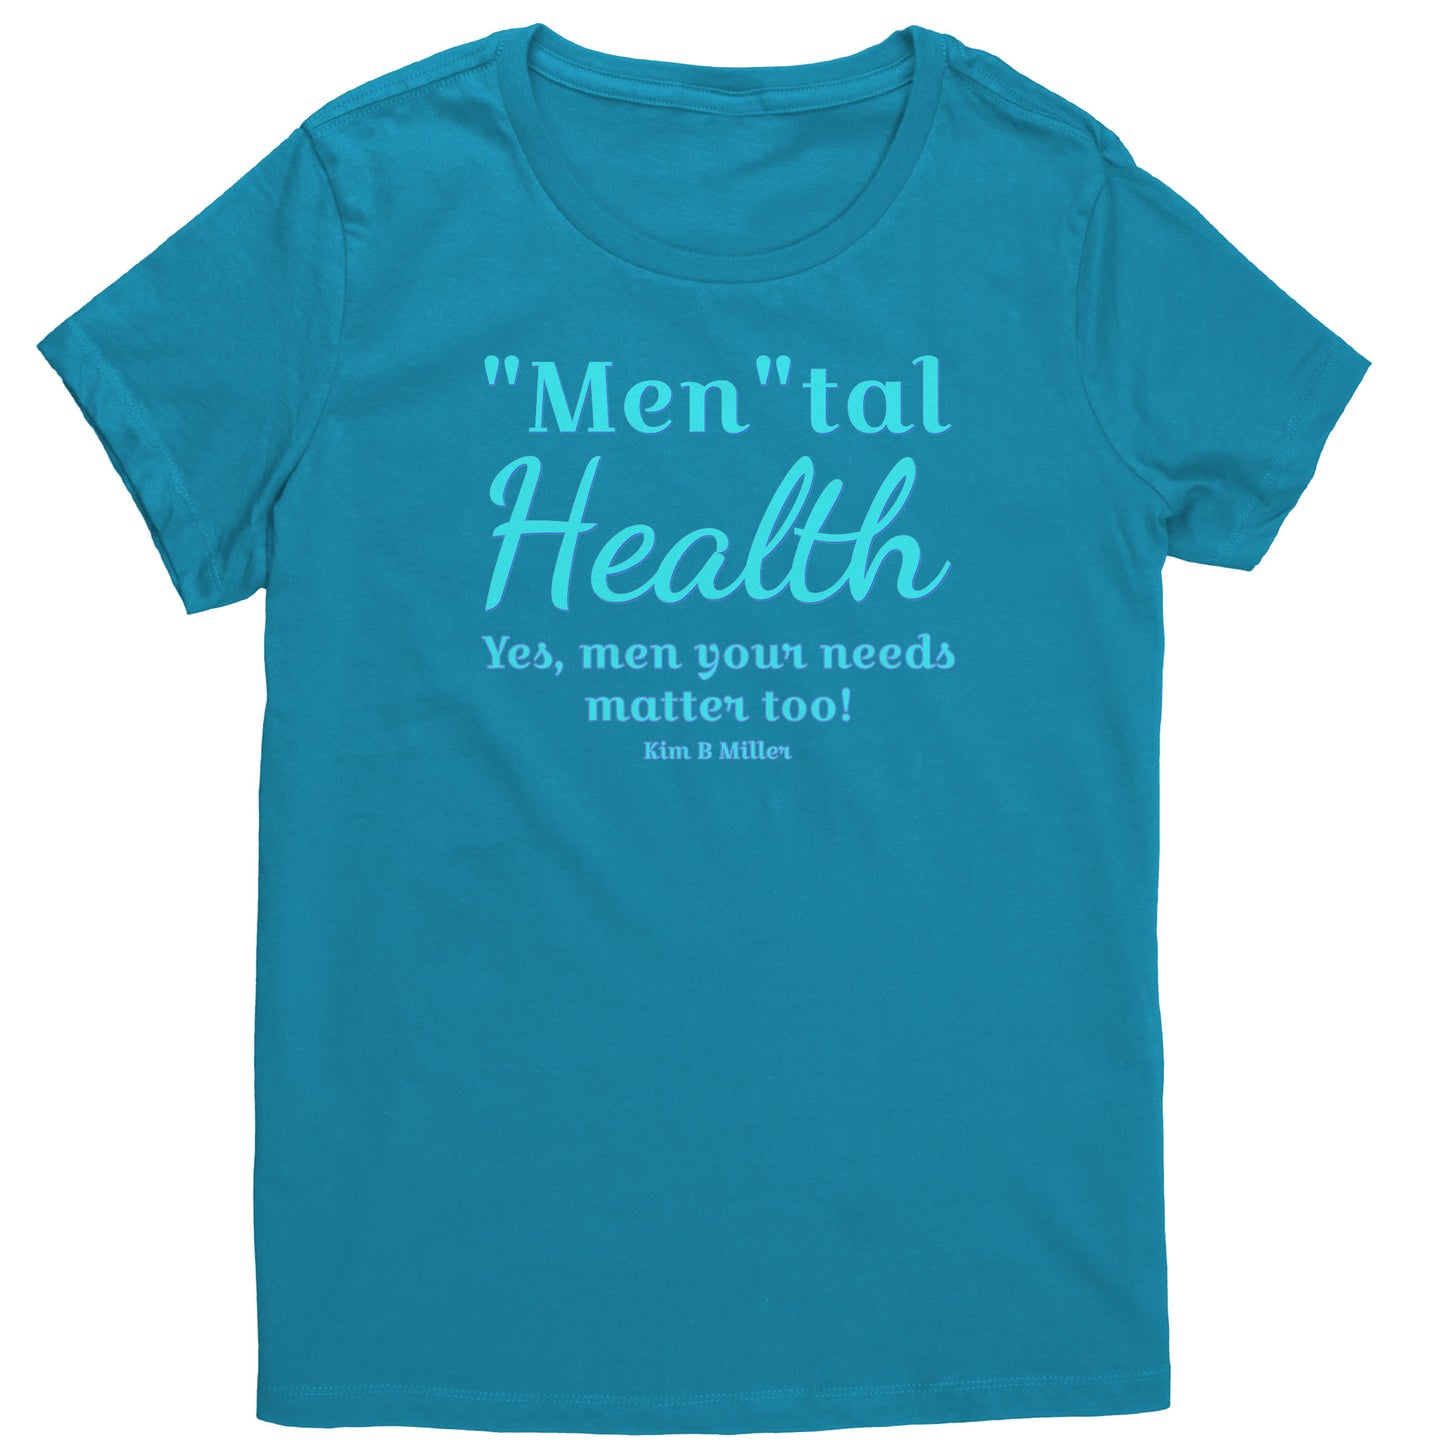 "Men"tal Health: District Women's Shirt